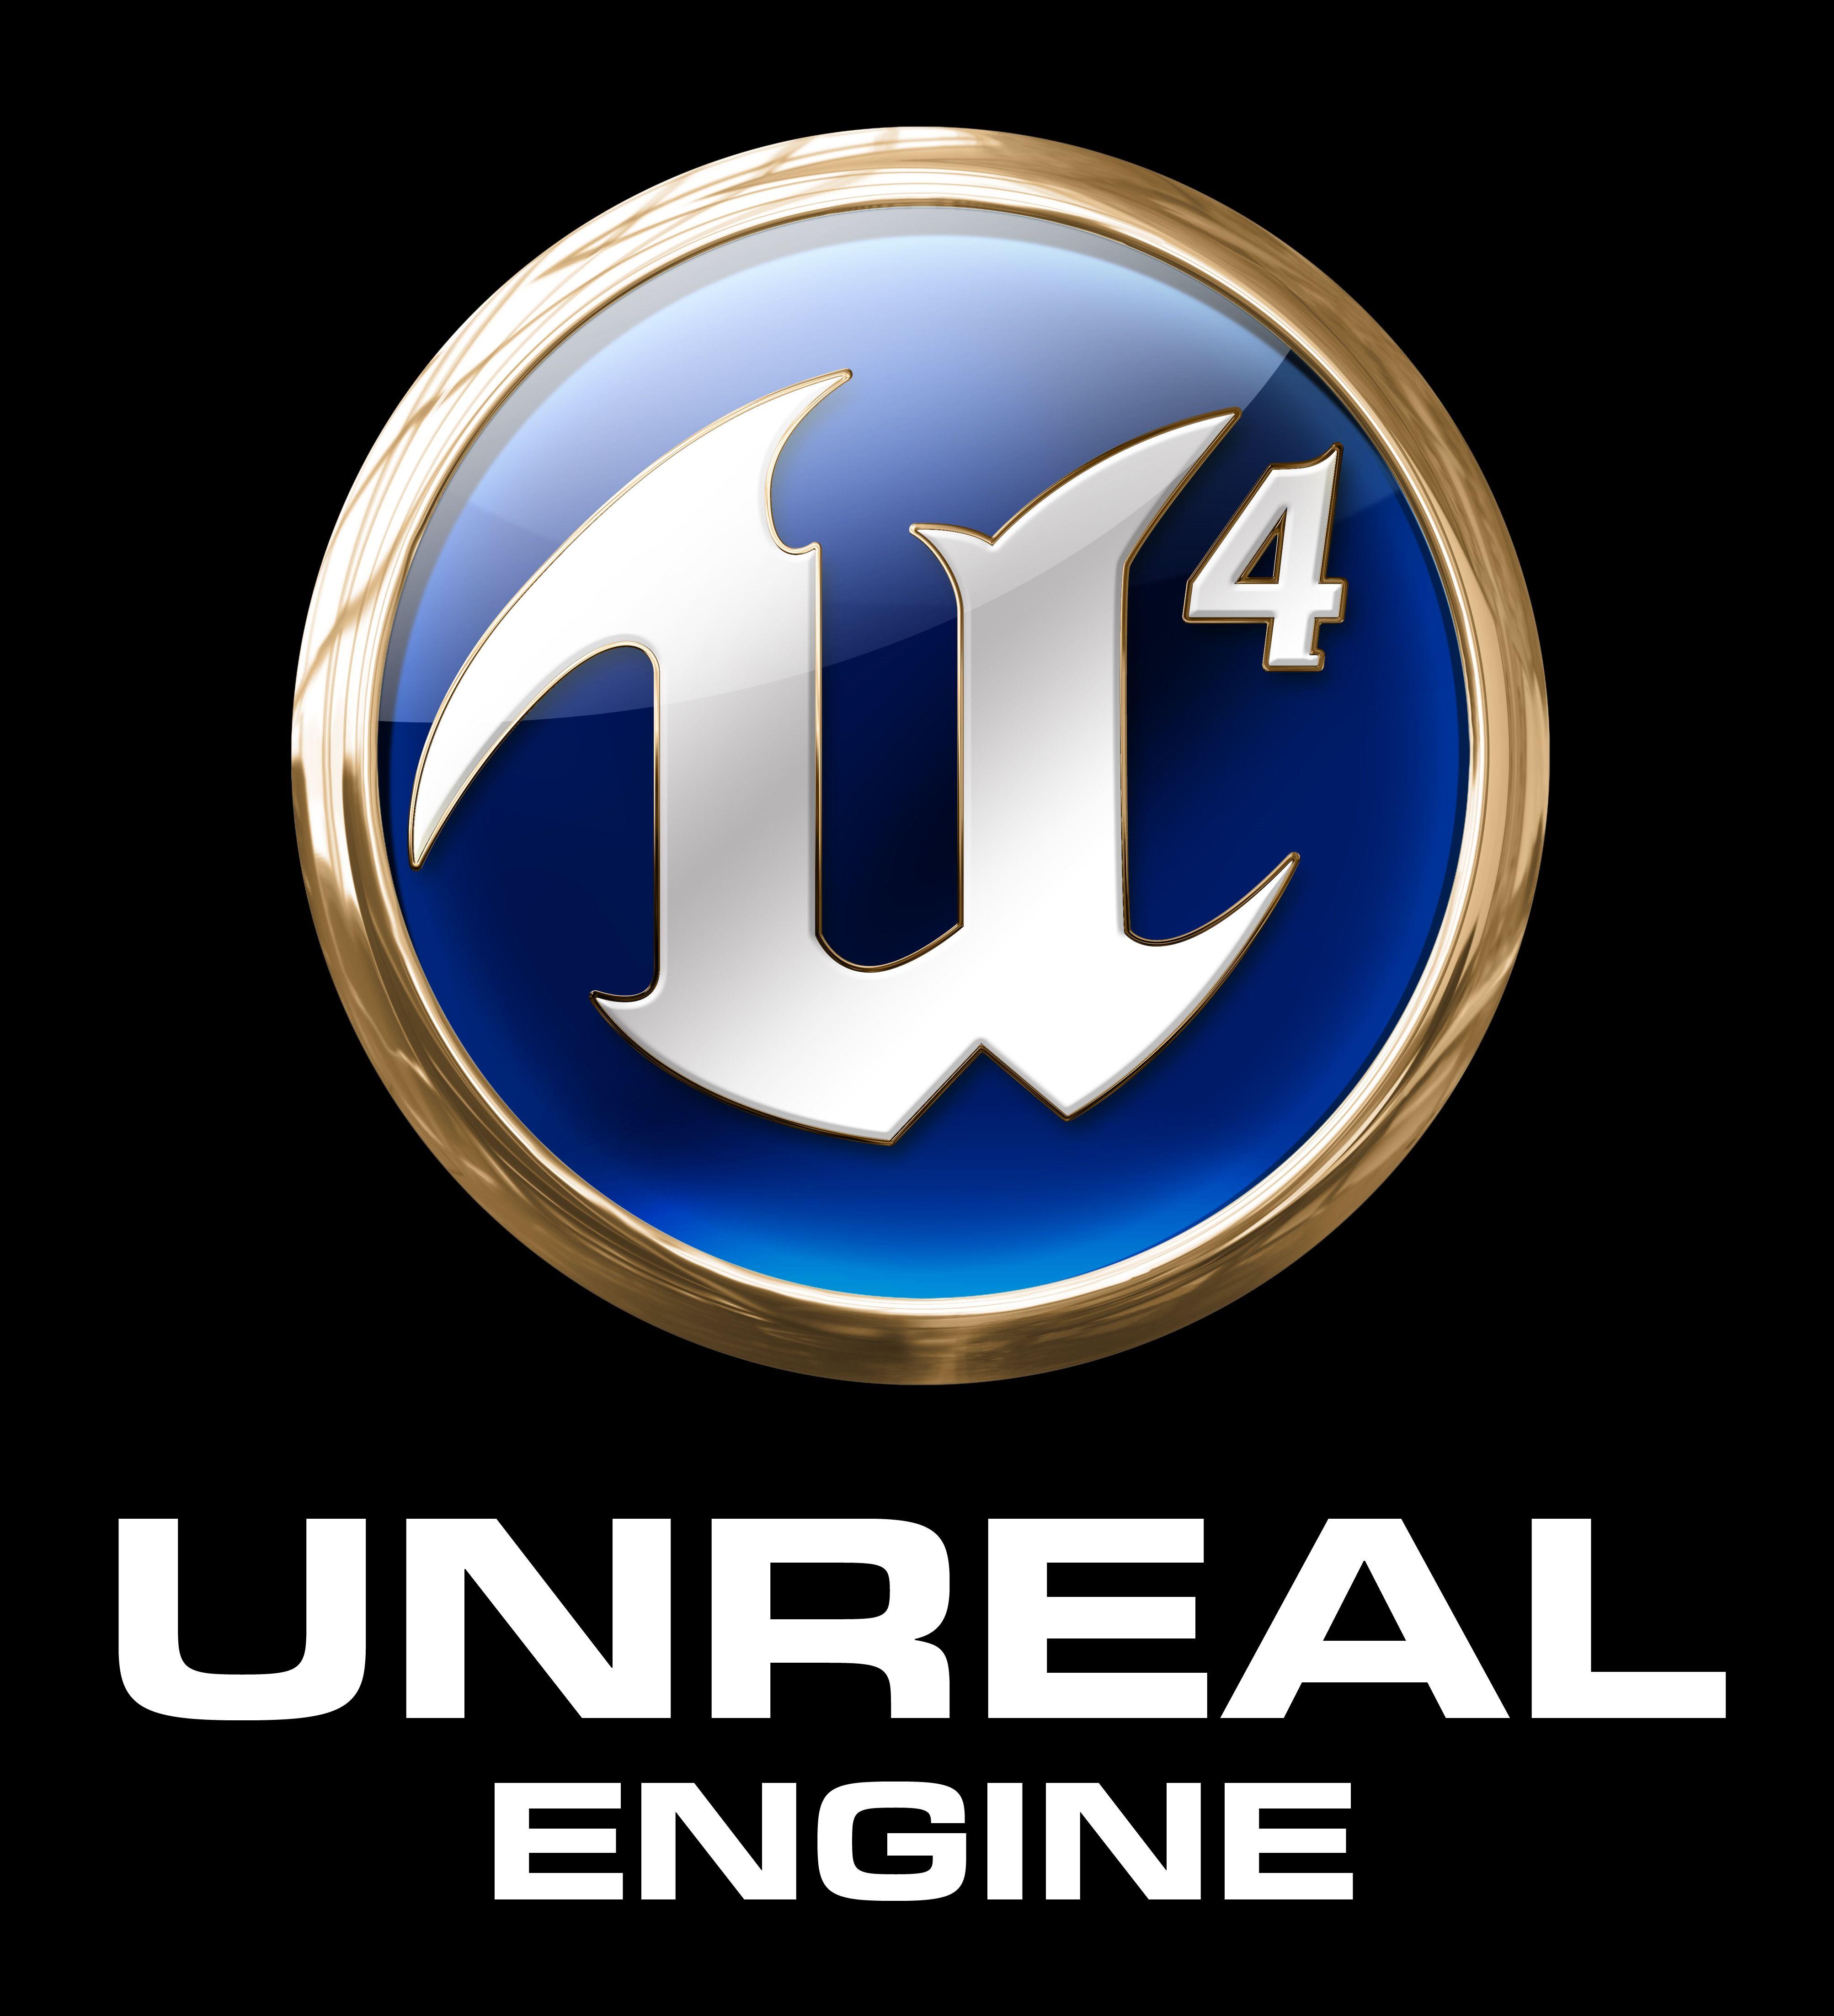 Unreal Logo - Unreal Engine 4 Logo Transparent HD Wallpaper, Background Image